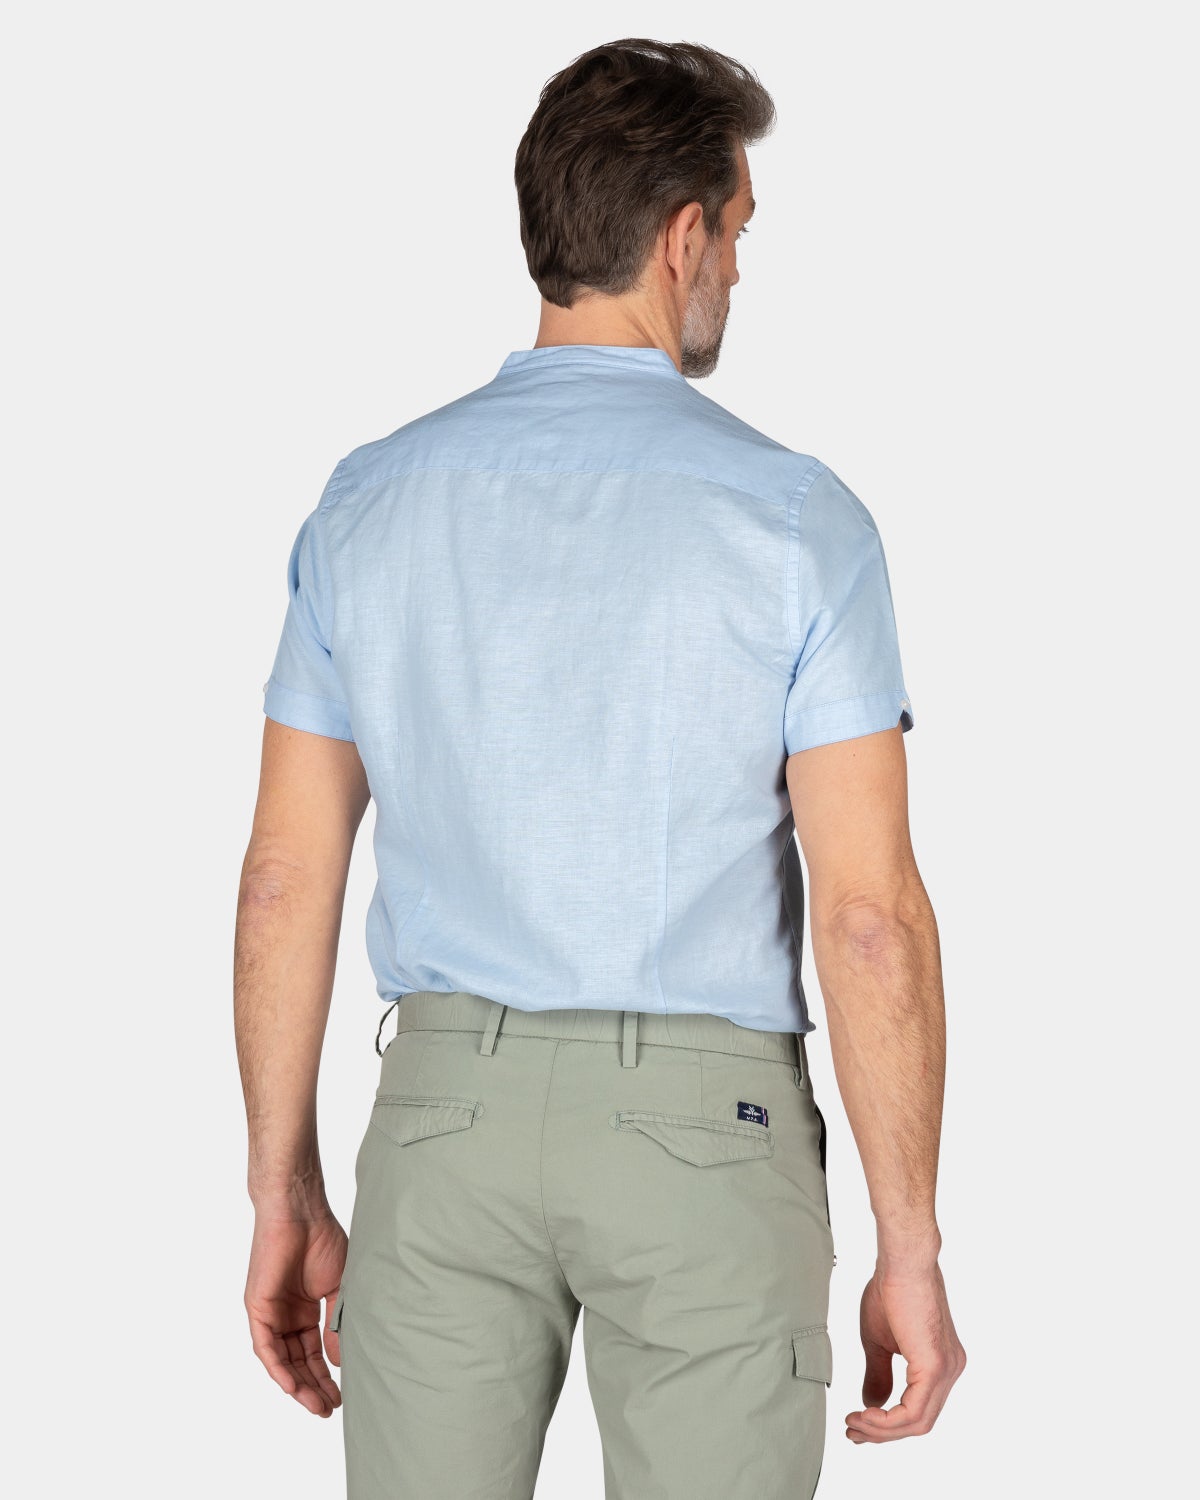 Collarless shirt with short sleeves - Rhythm Blue